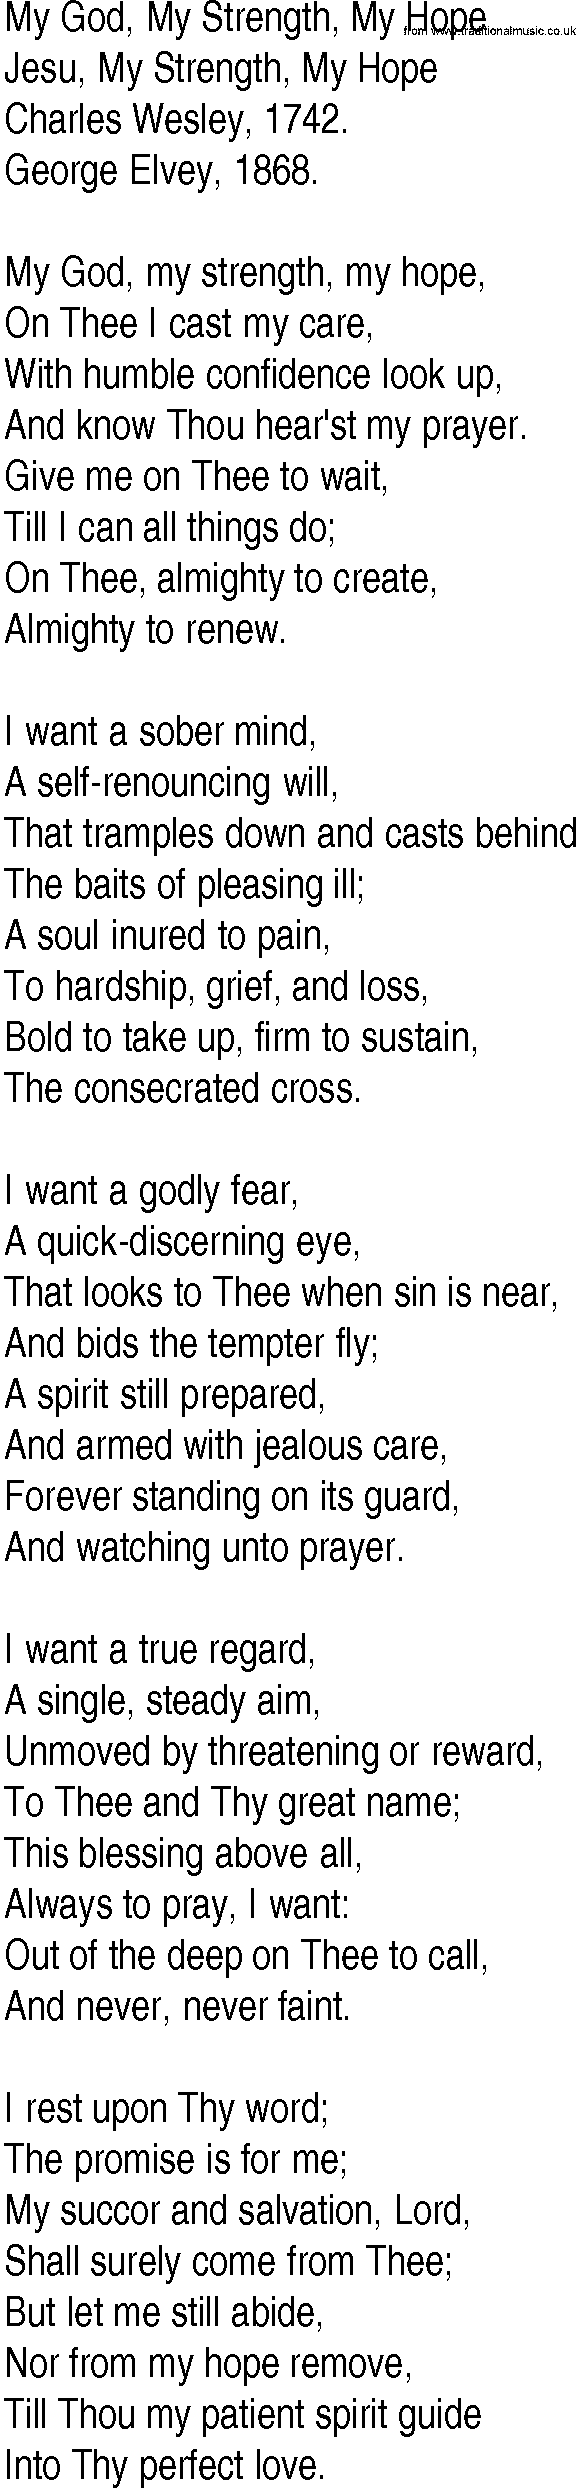 Hymn and Gospel Song: My God, My Strength, My Hope by Charles Wesley lyrics